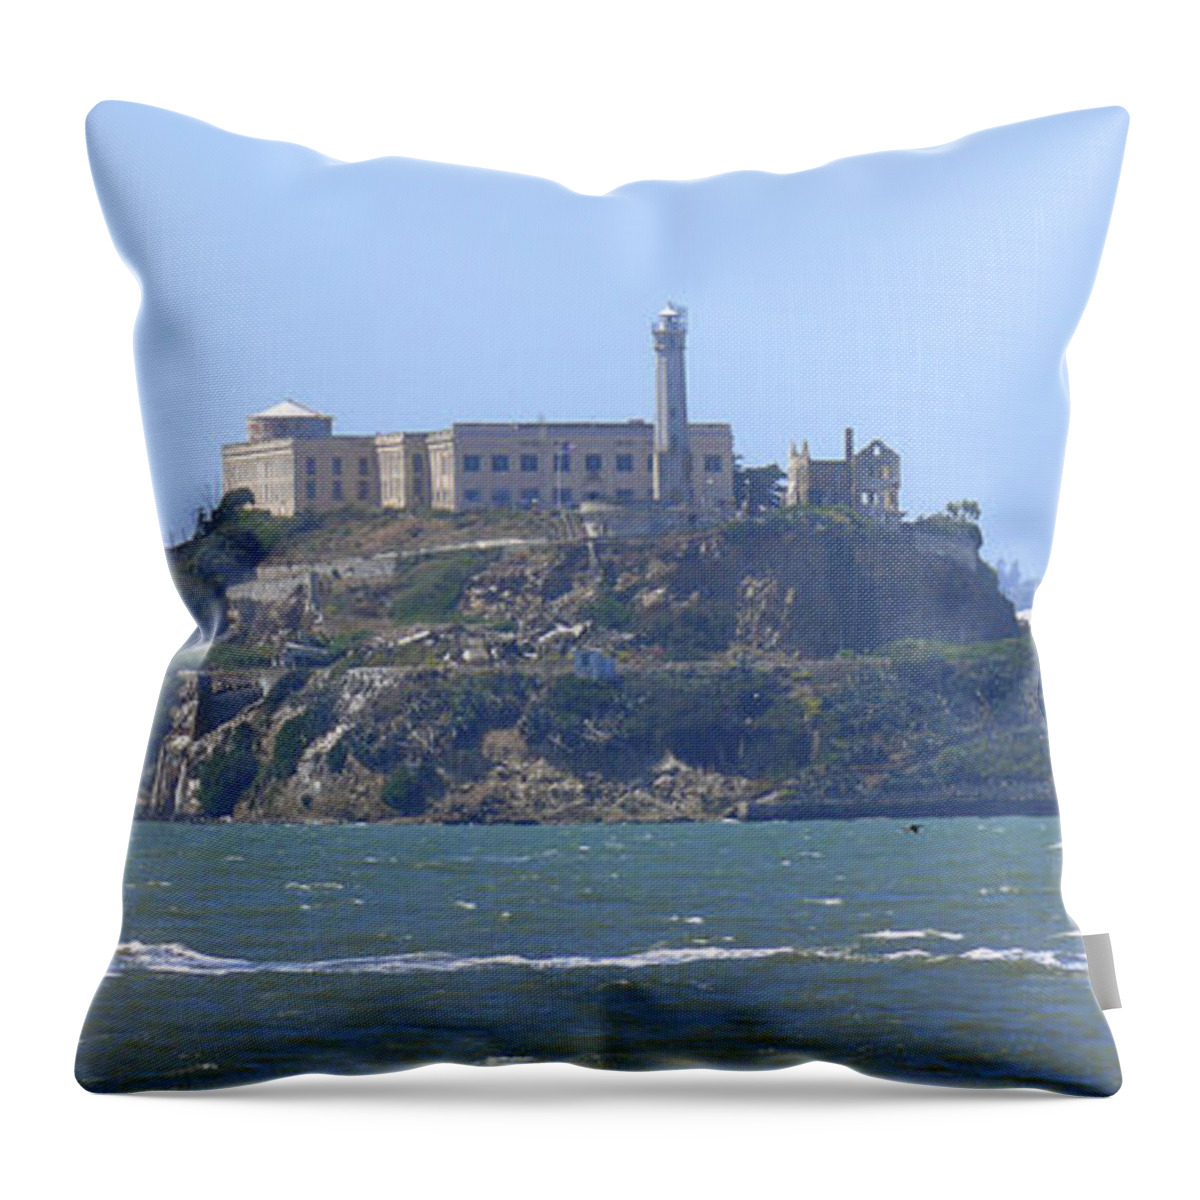 Landmarks Throw Pillow featuring the photograph Alcatraz Island by Mike McGlothlen